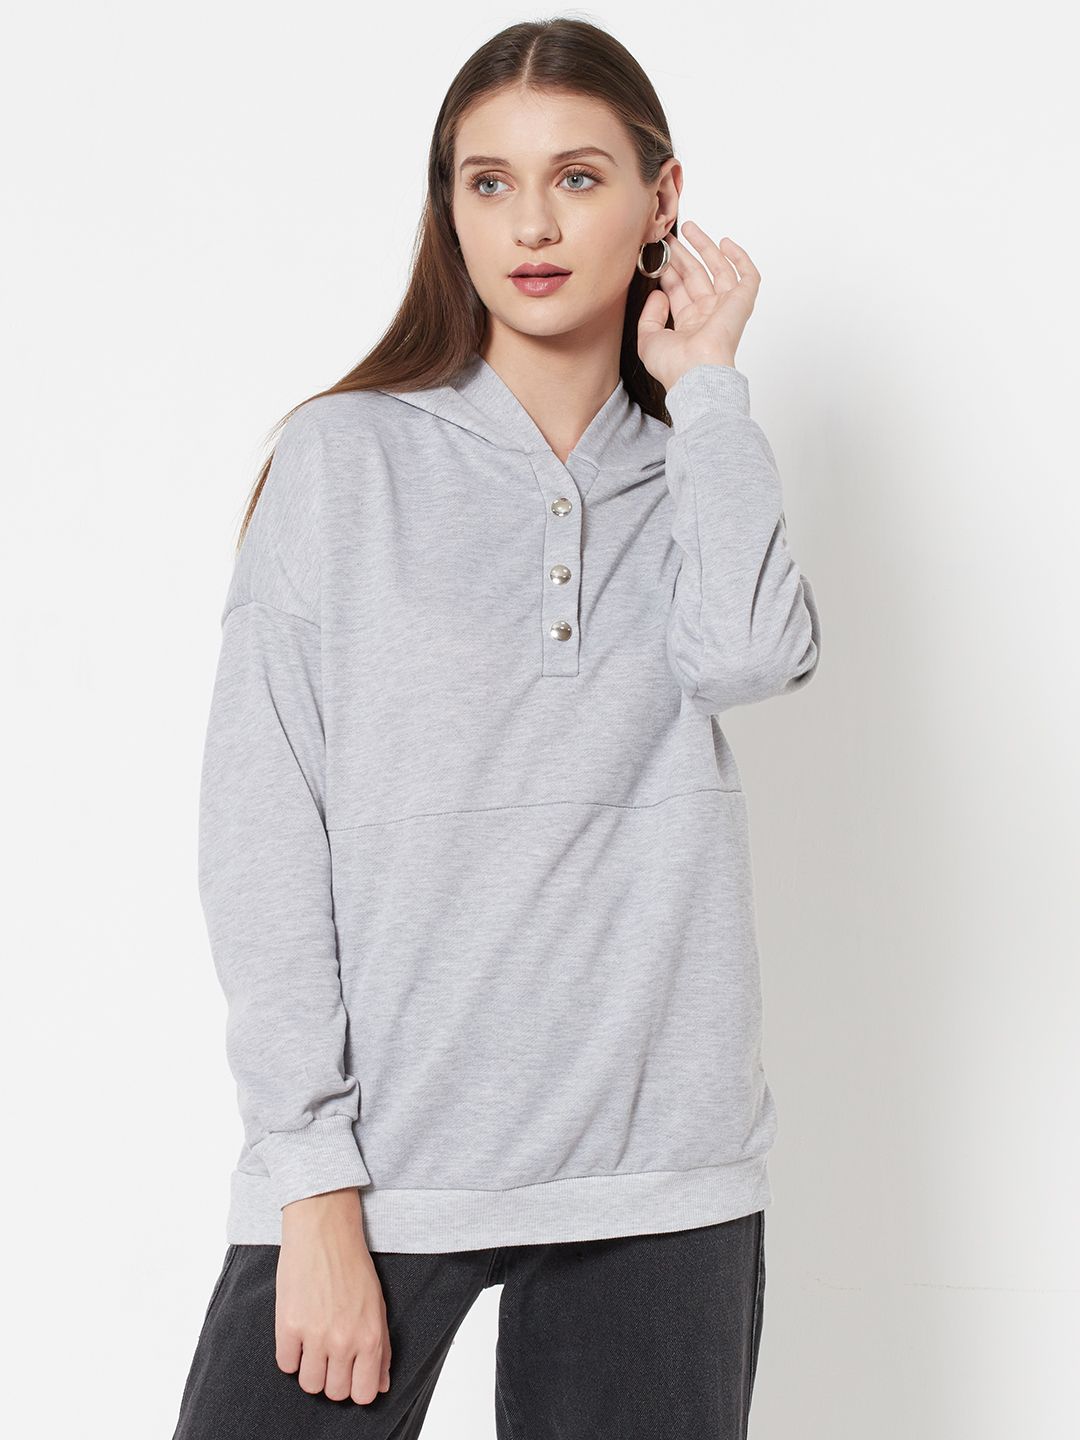 URBANIC Women Grey Melange Hooded Sweatshirt Price in India